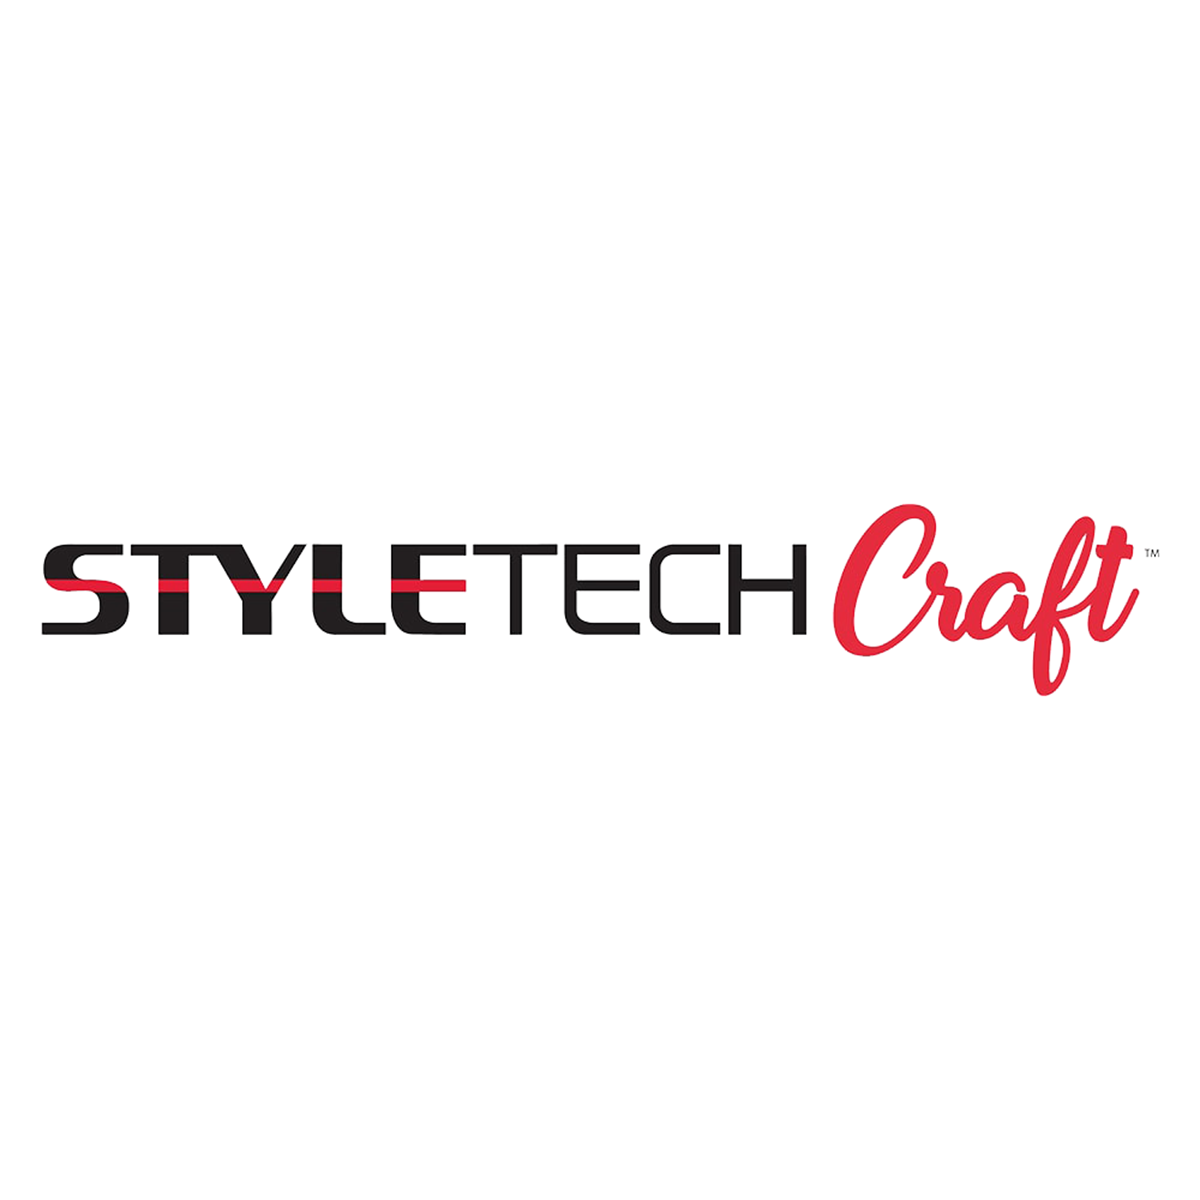 StyleTech Craft™